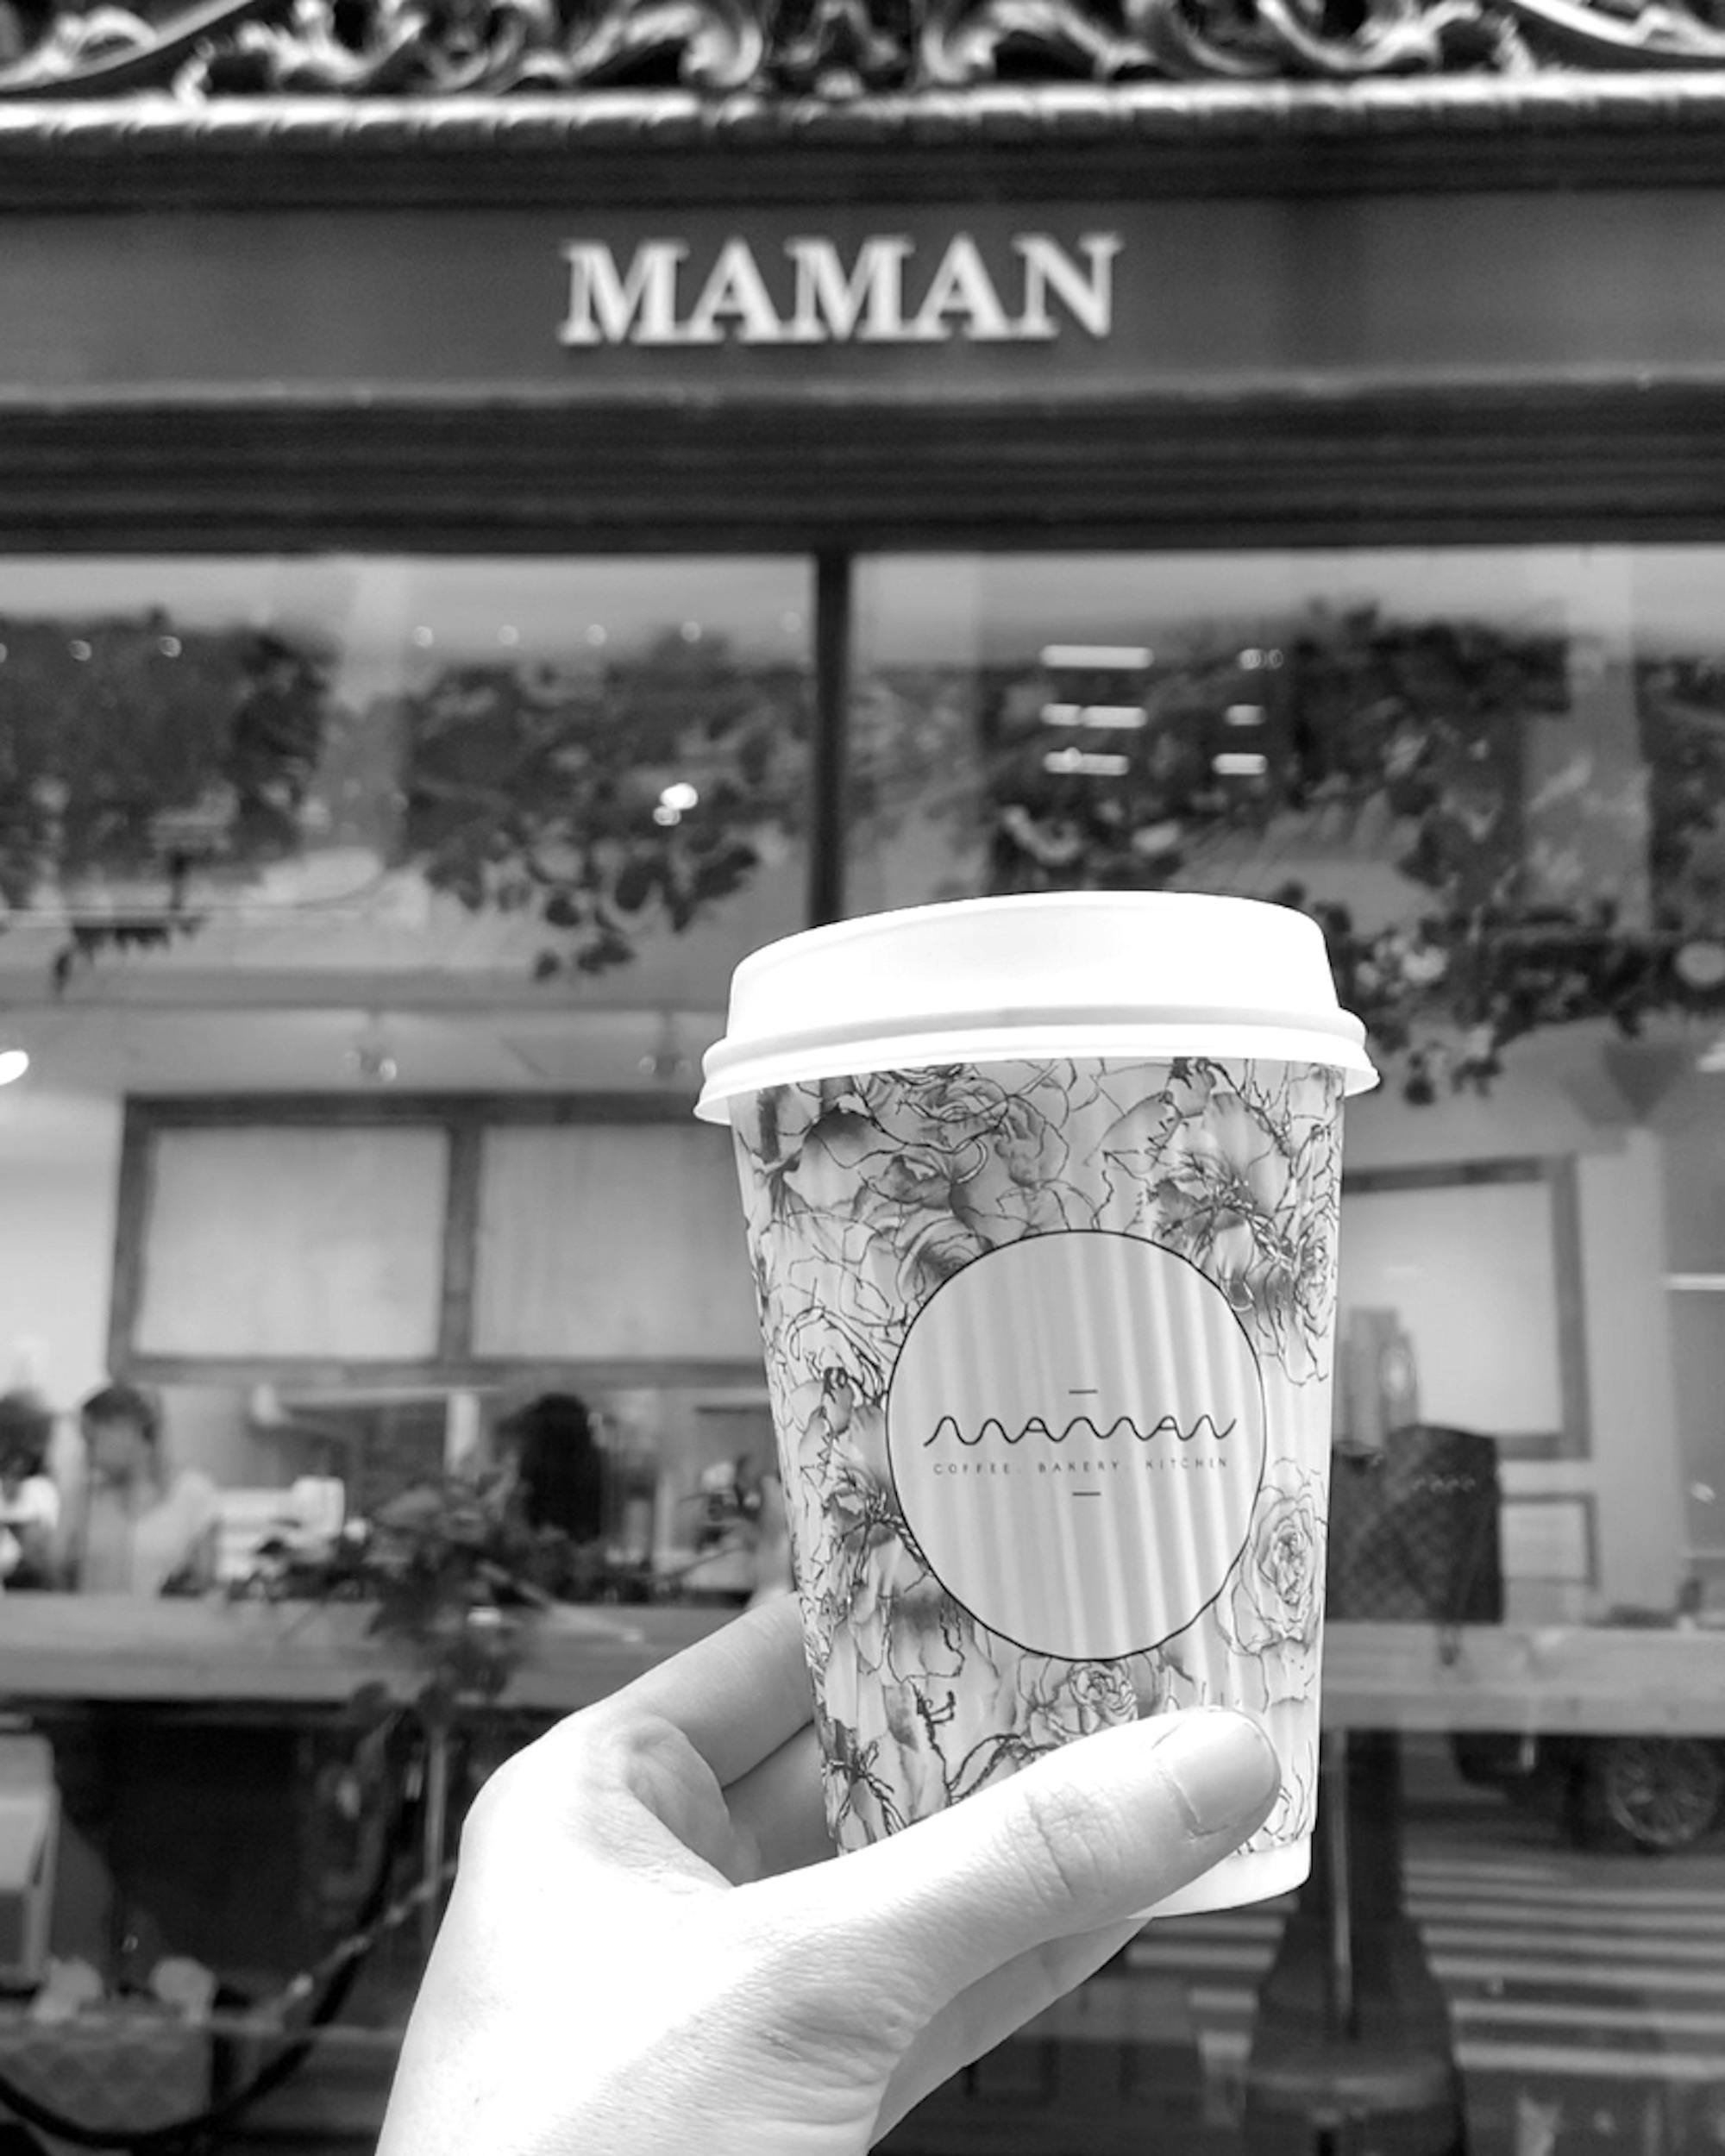 maman sign and maman cup grand central